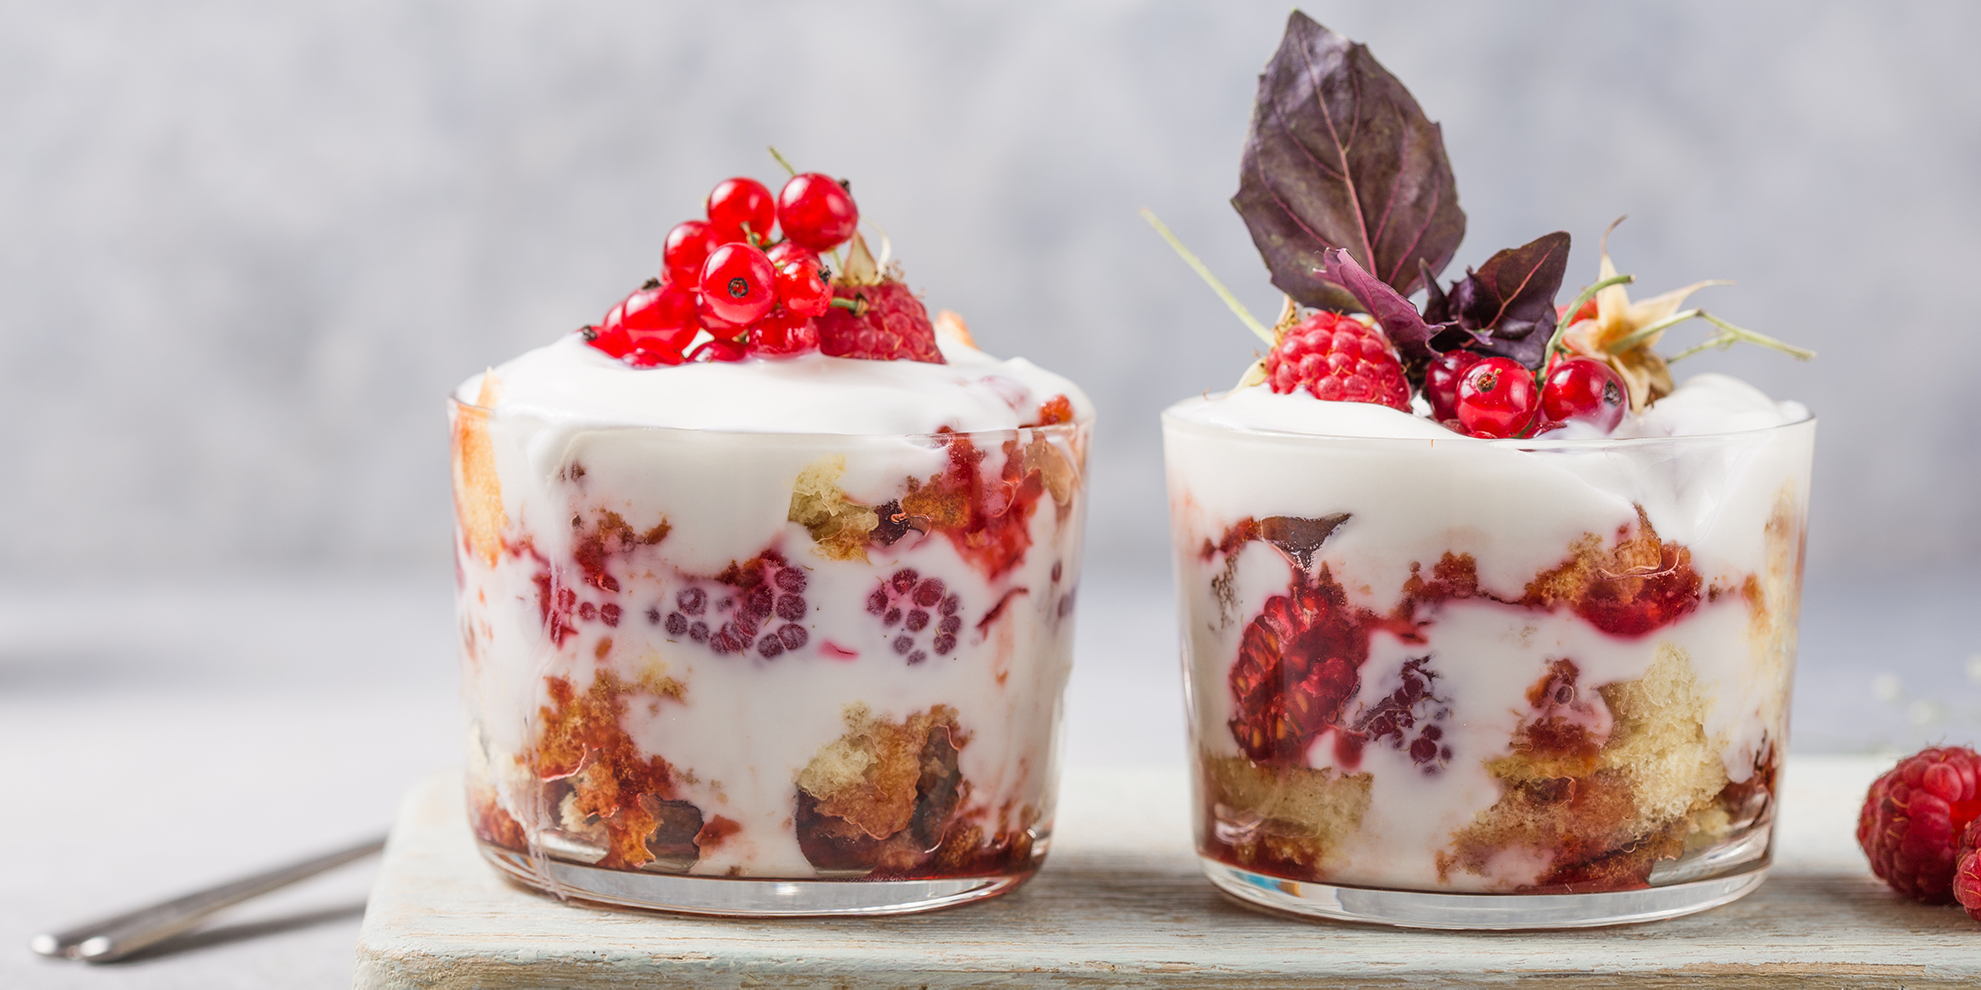 Trifle with sponge cake, whipped cream, and raspberries